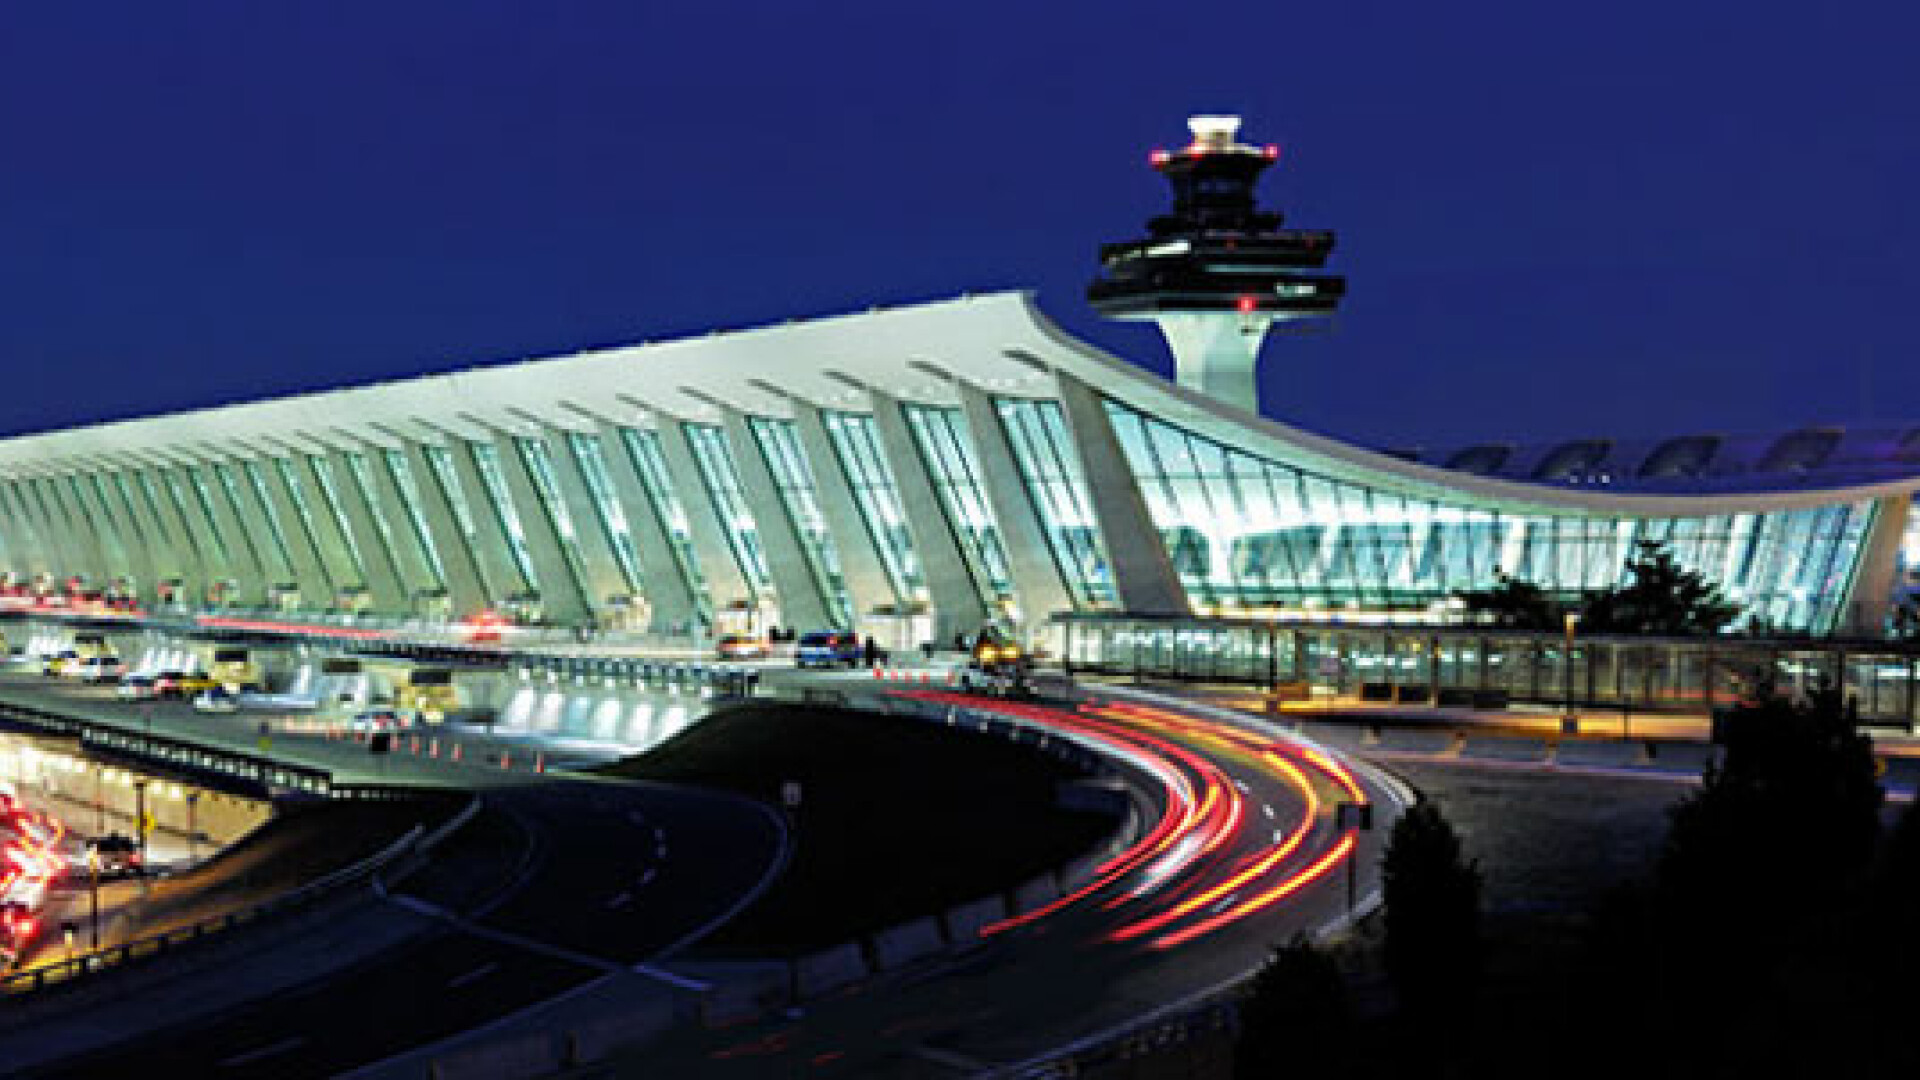 aeroportul Dulles